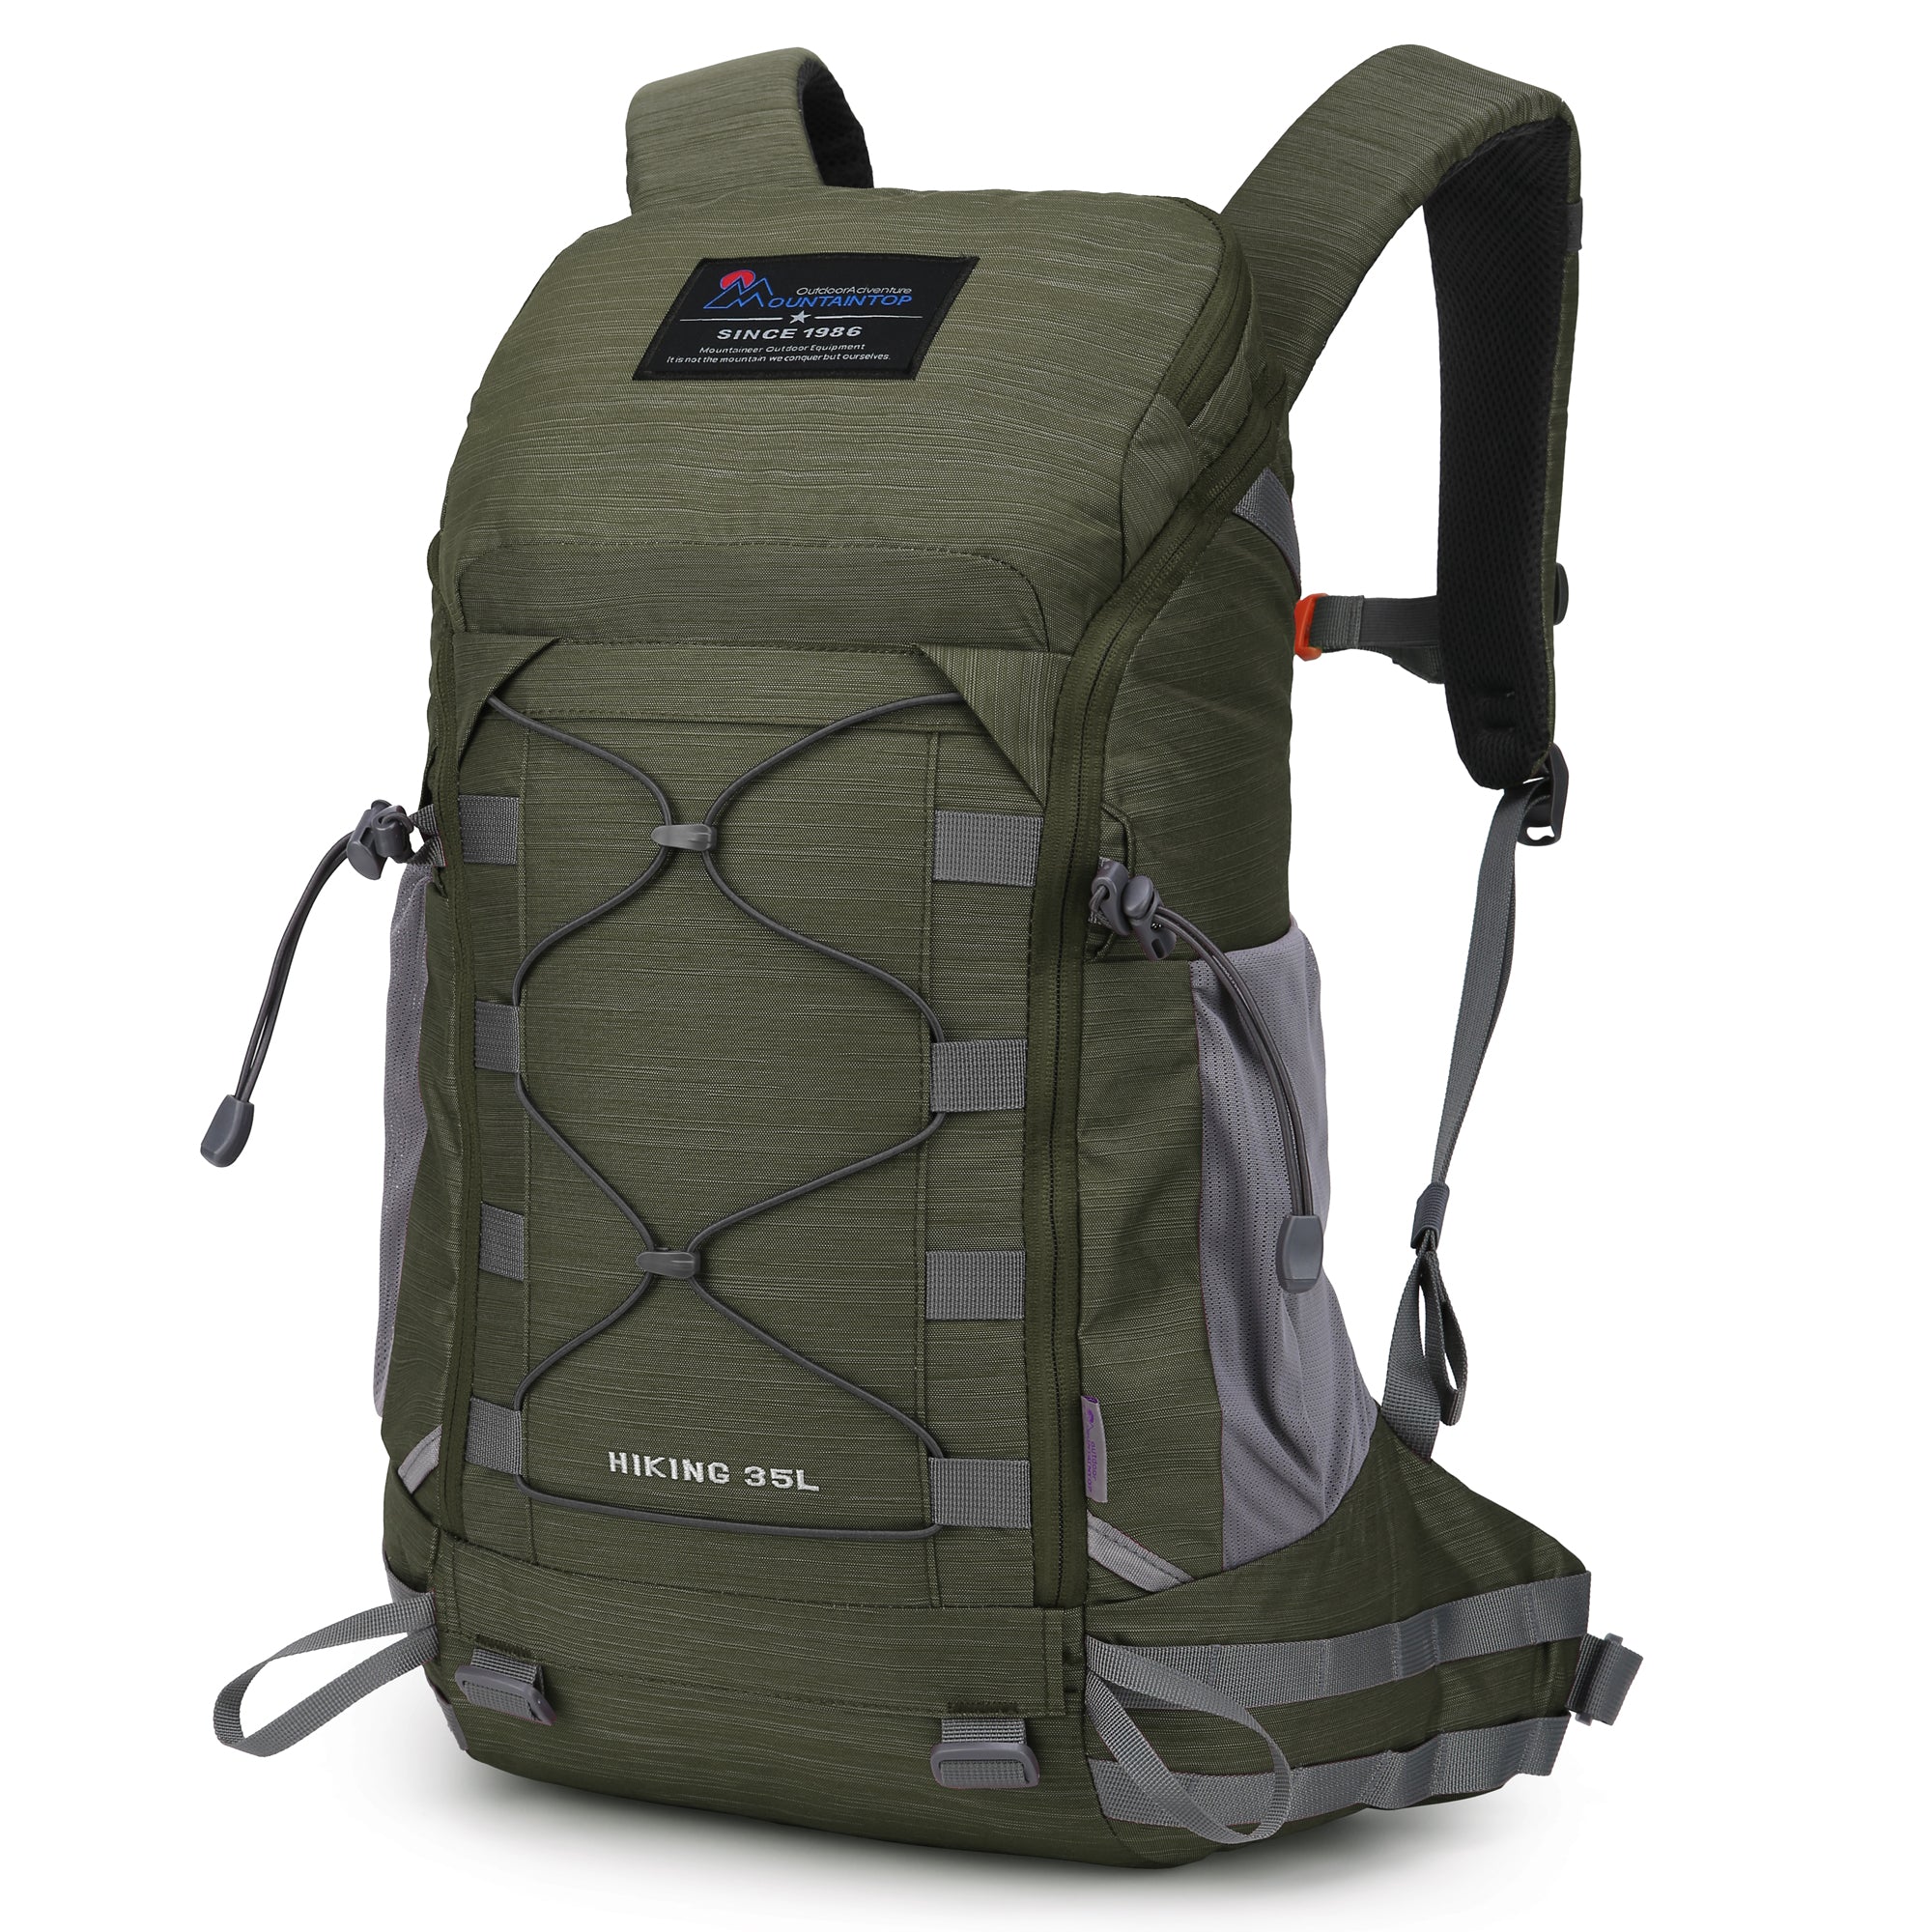 Backpack Army Green,,Travel Backpack Men